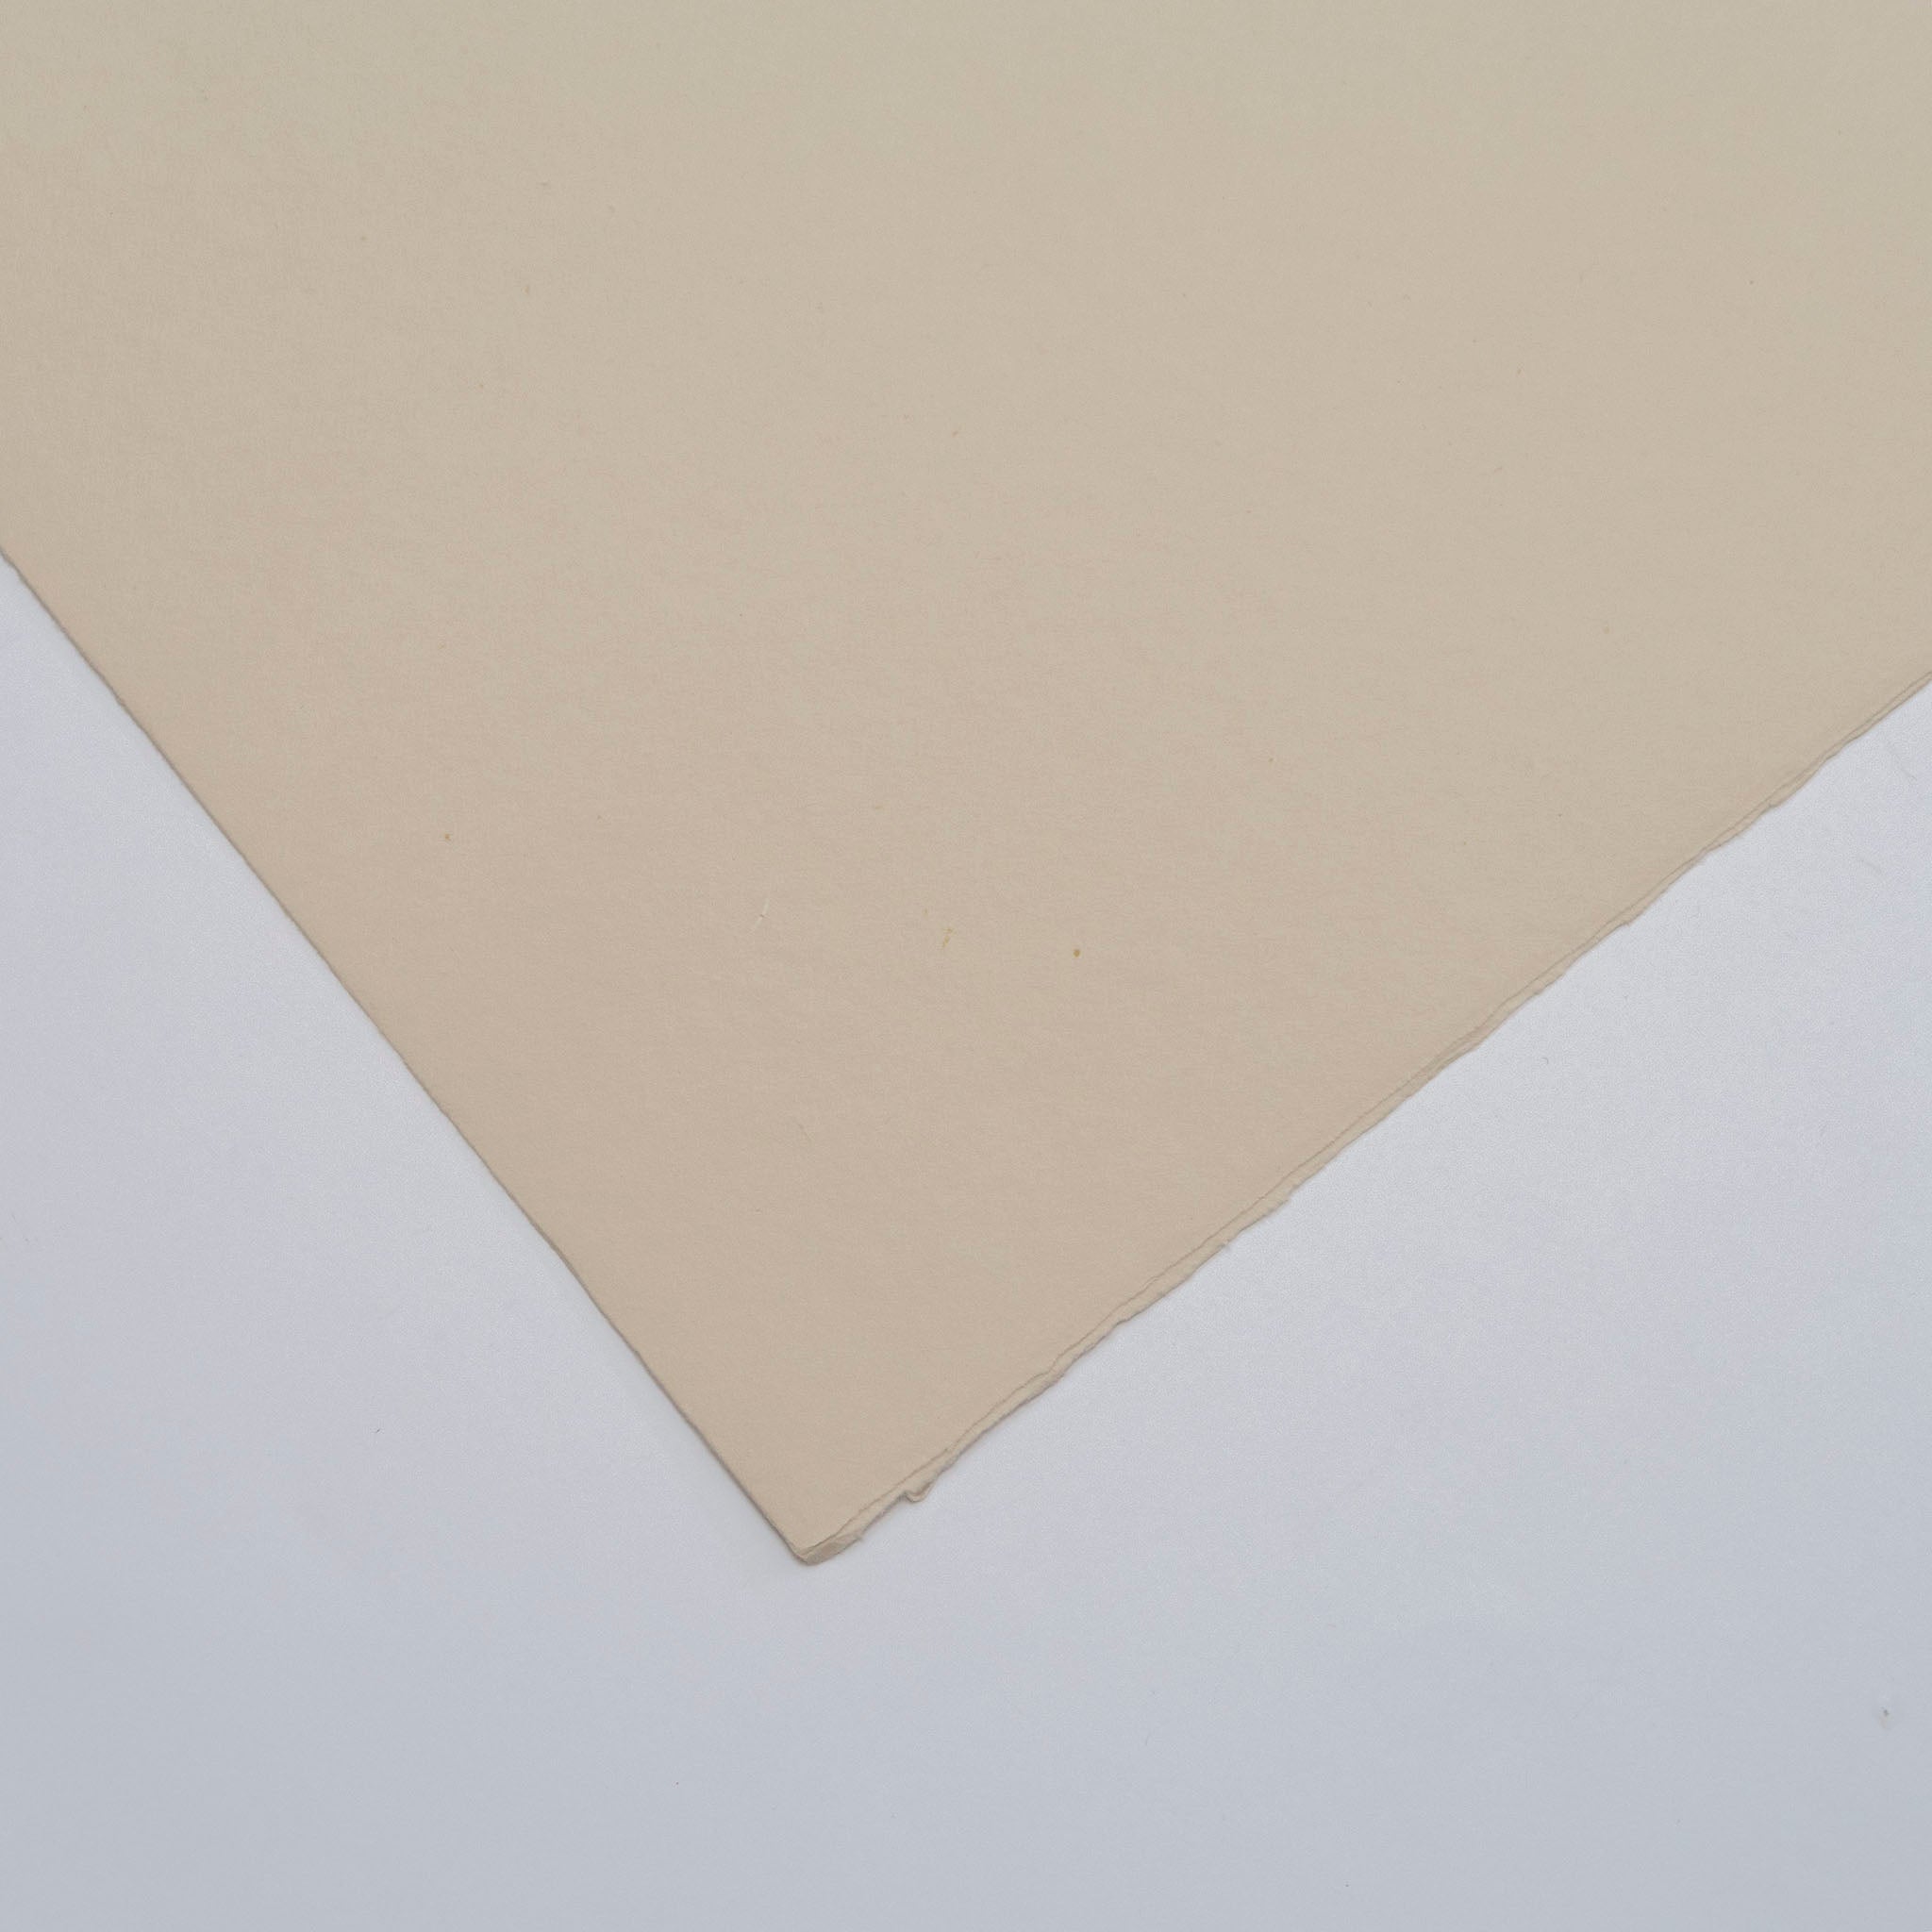 Awagami Japanese Paper - Kitakata Select Warm 36gsm